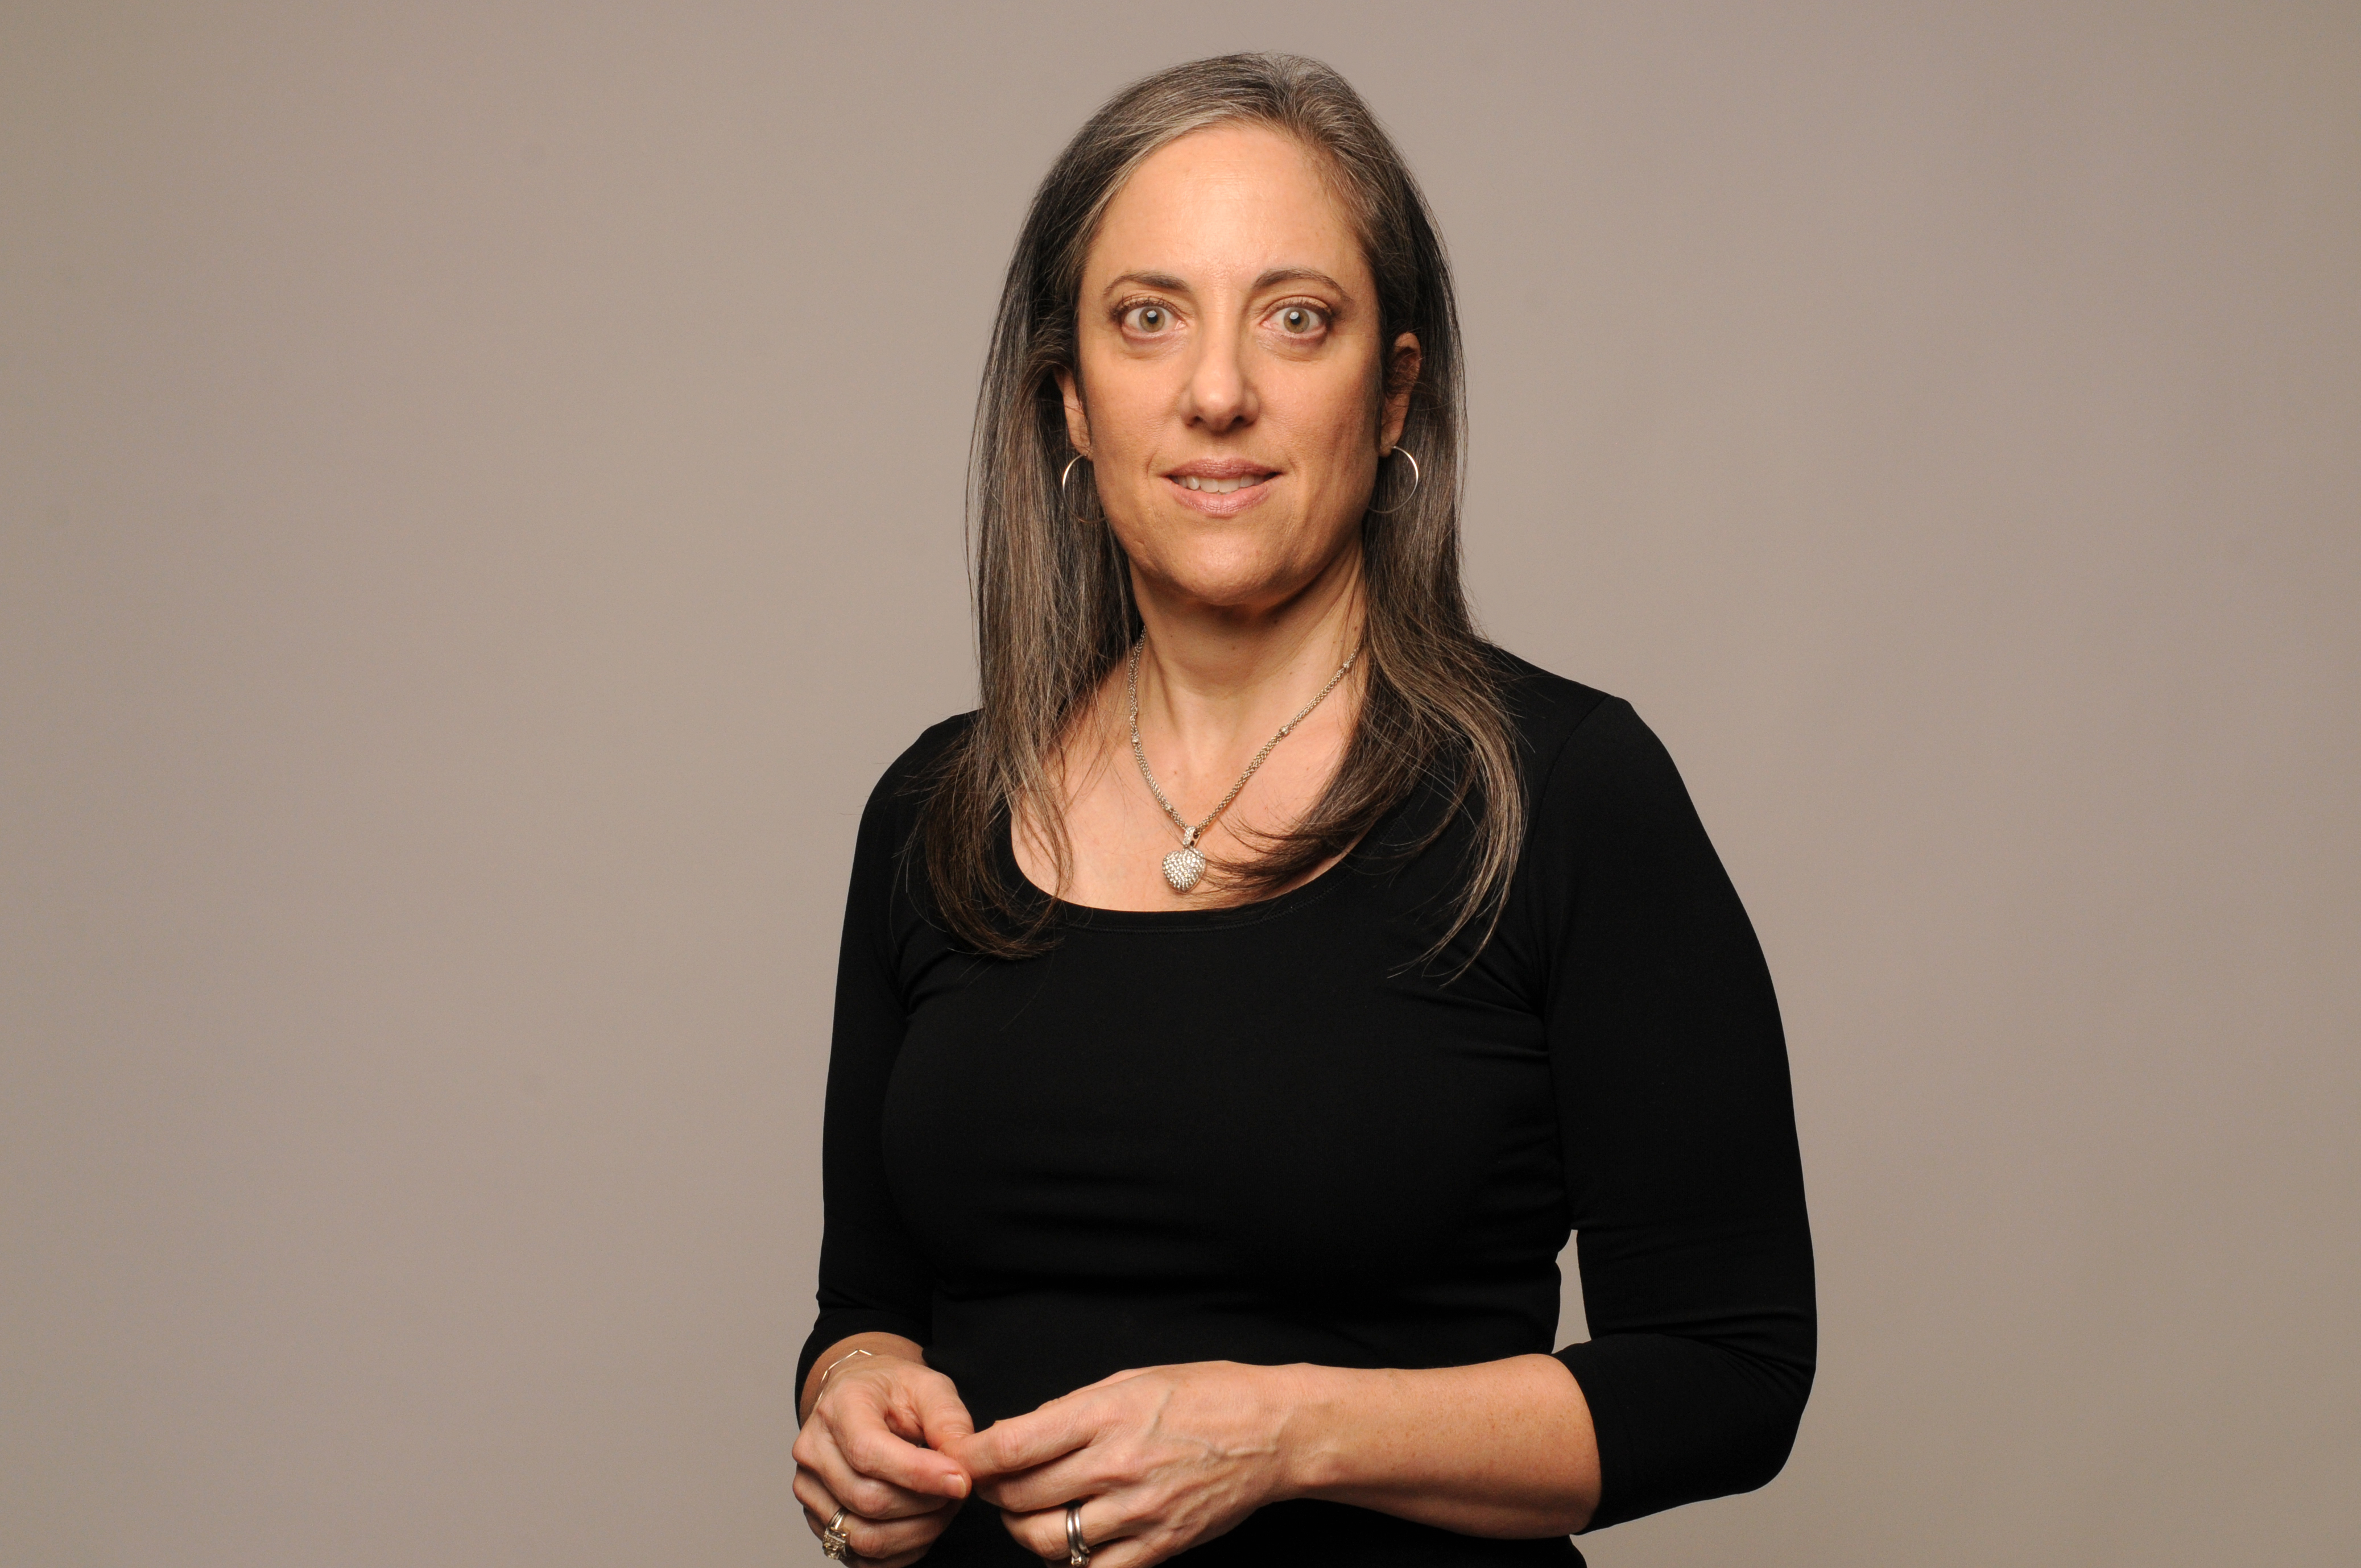 Julie T. Katzman